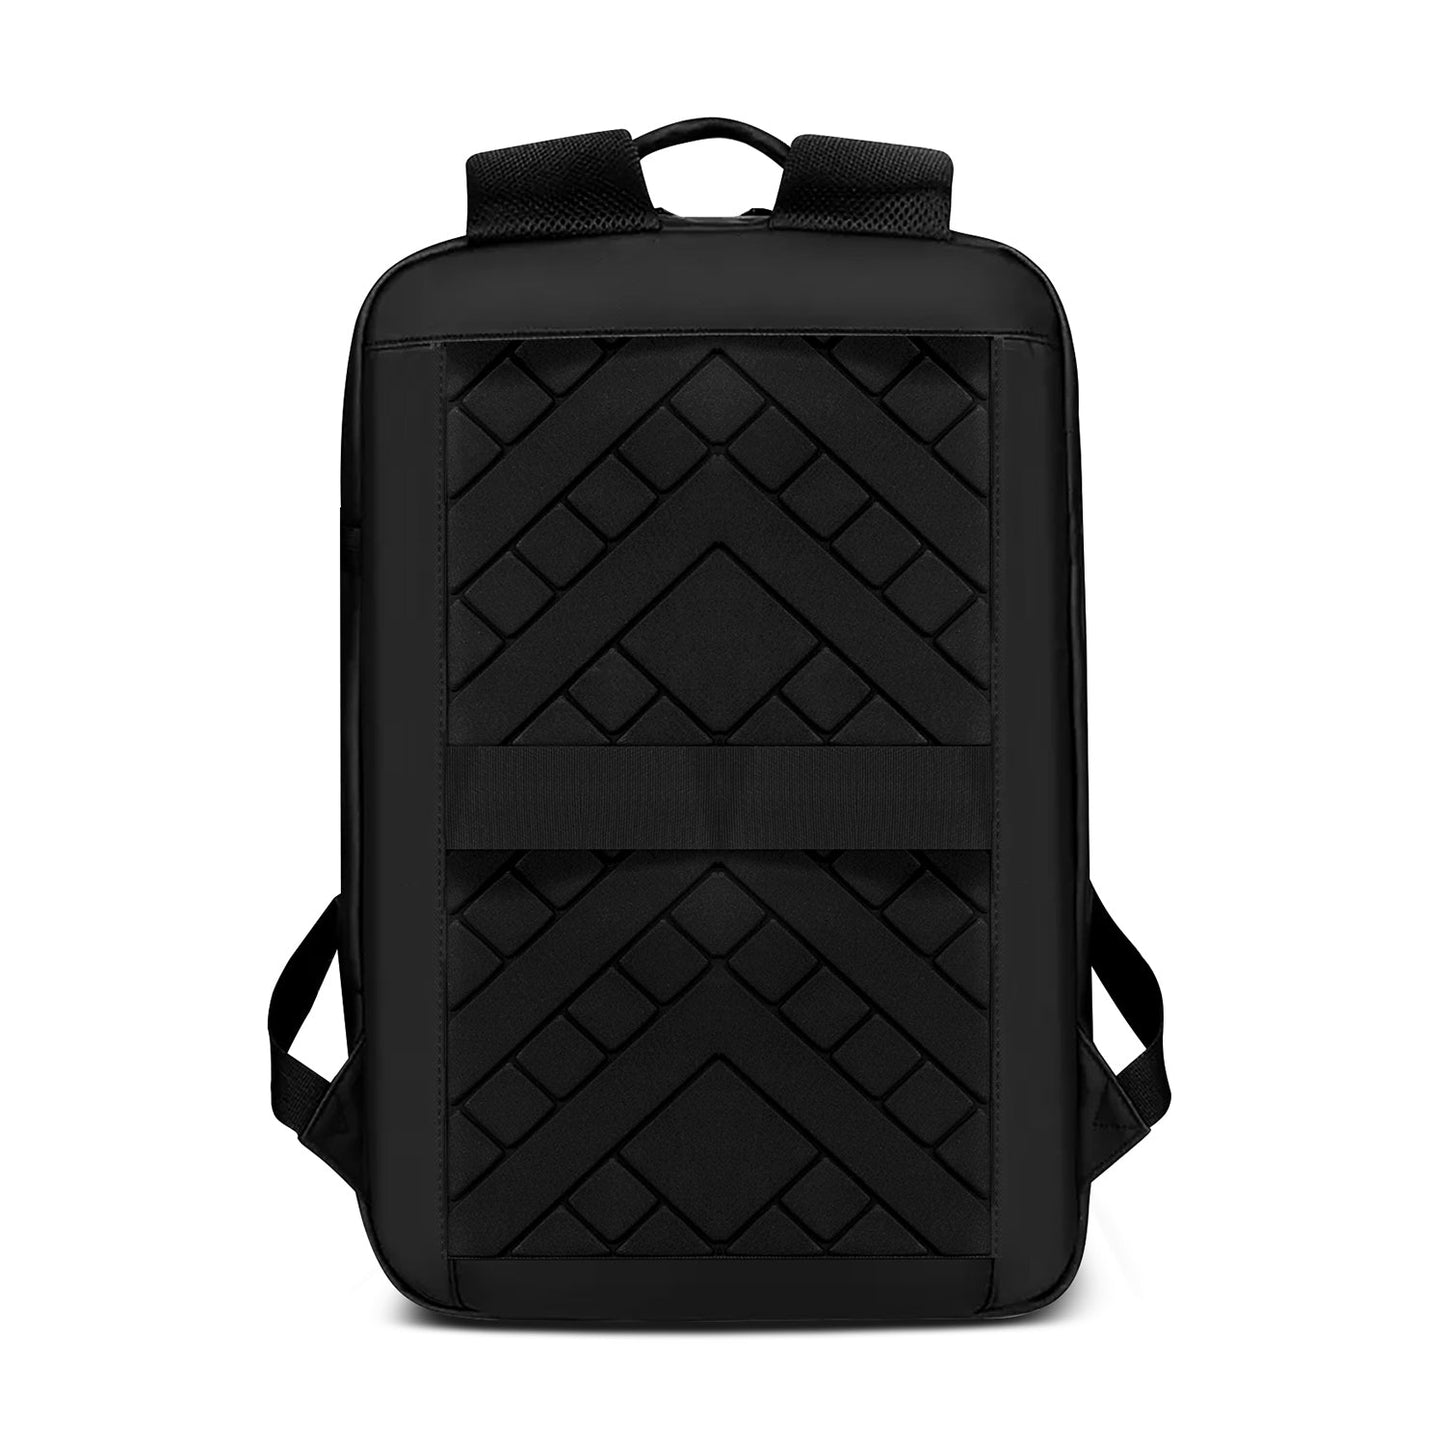 Gripp Trek Backpack Upto 15.6" For Laptop/macbook - Black